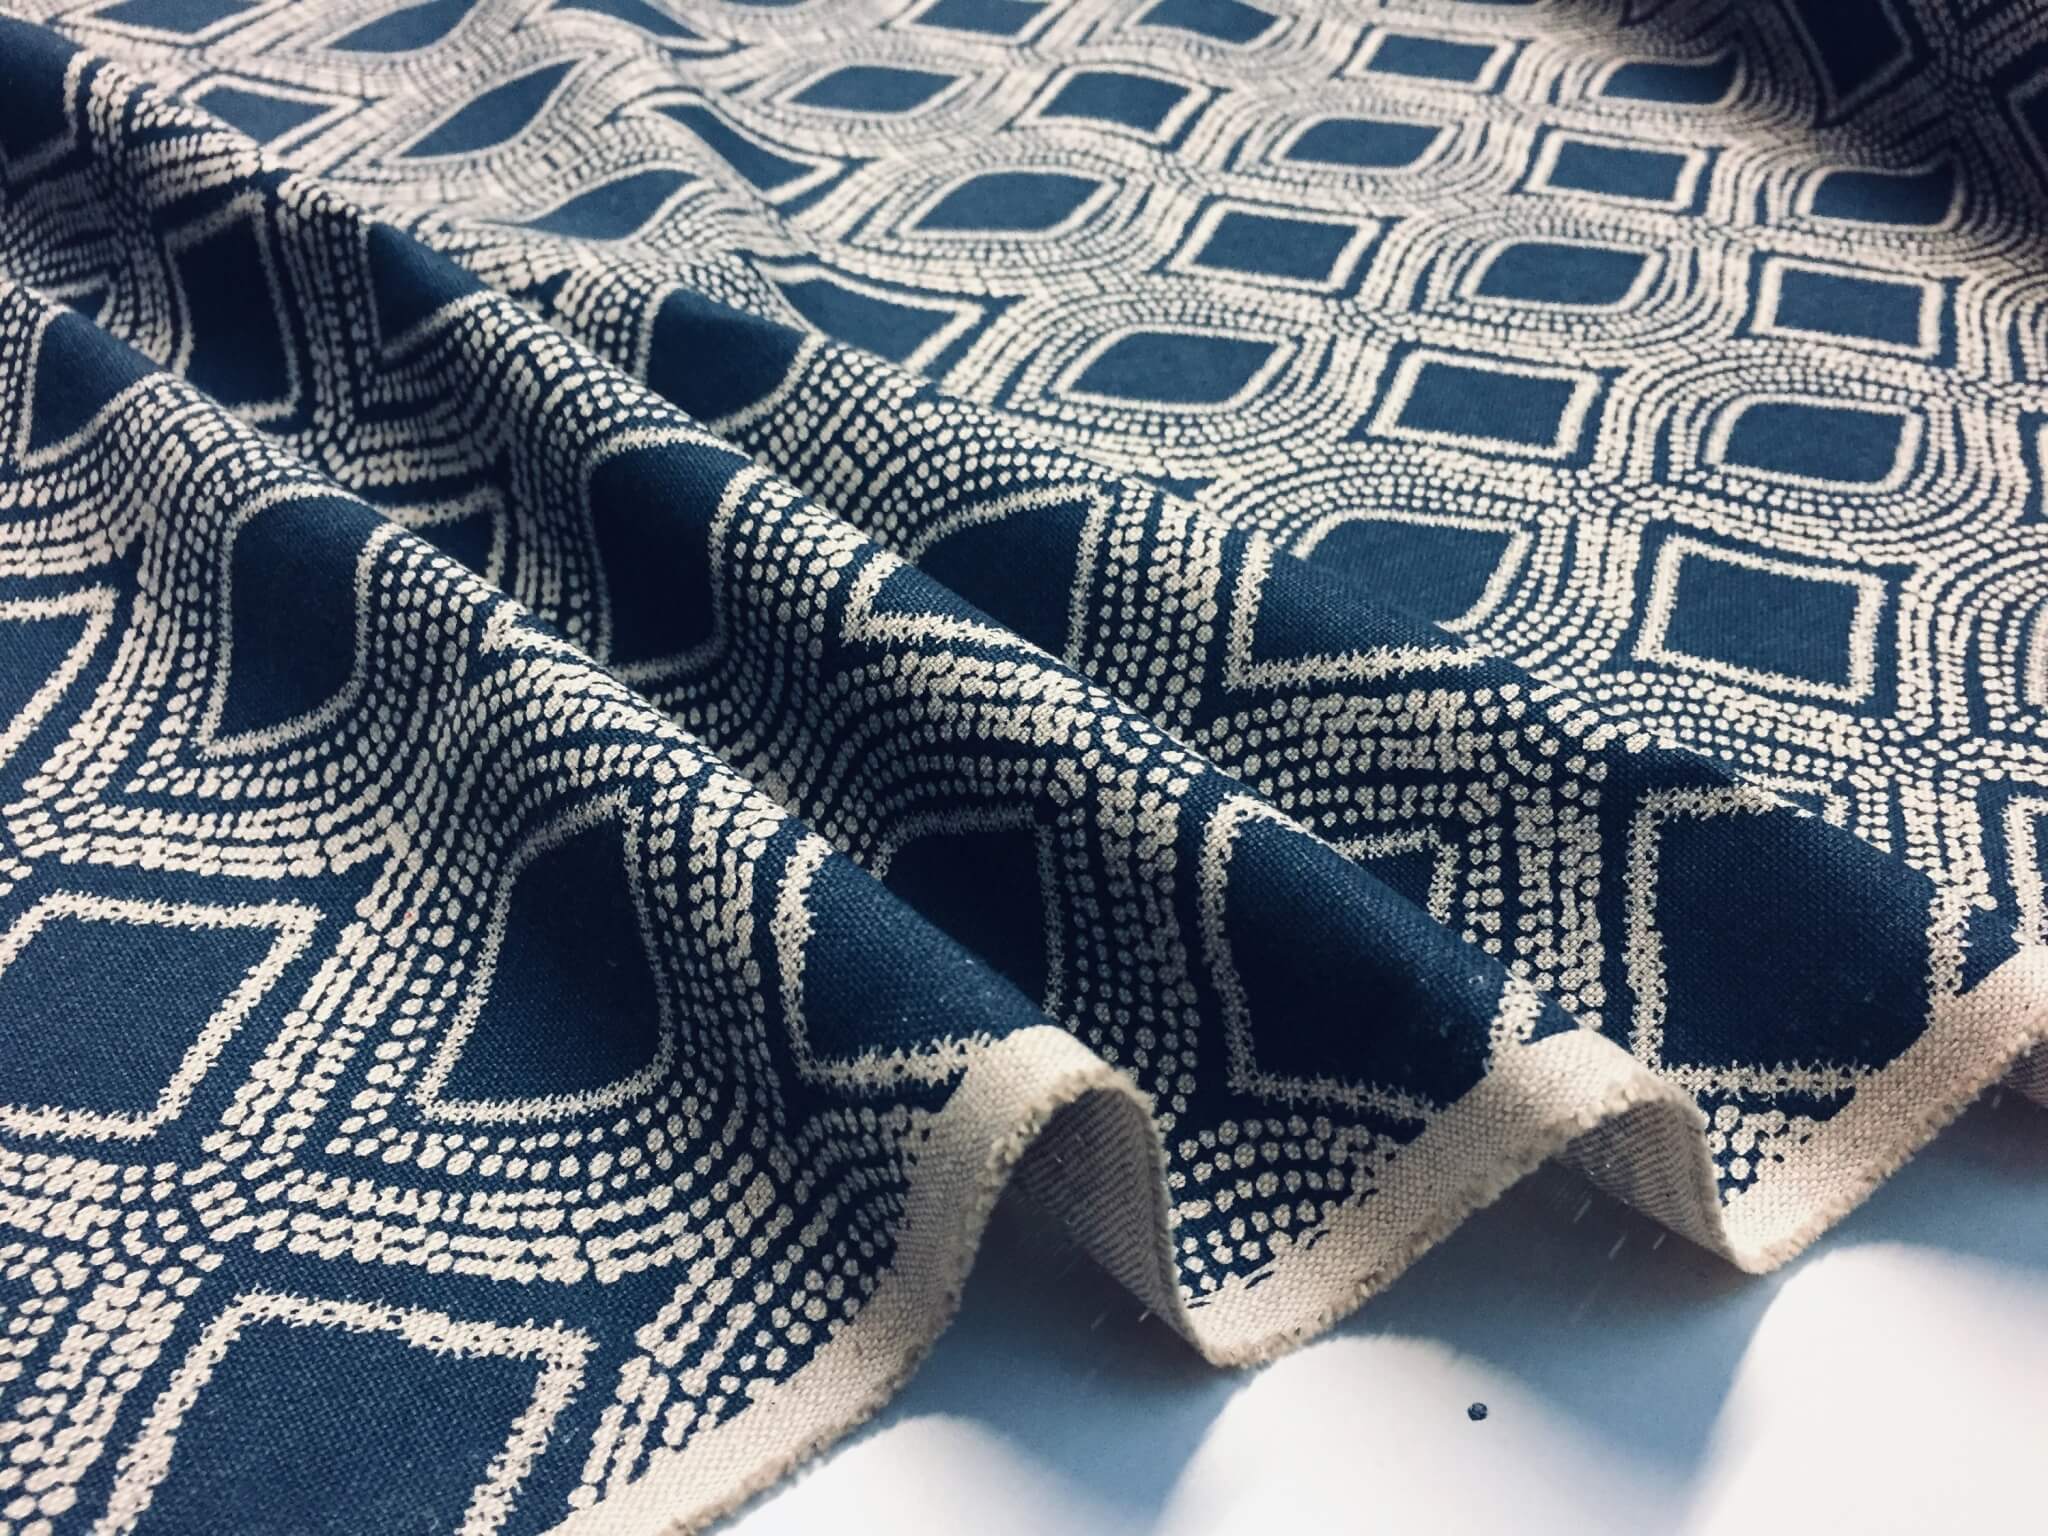 Art Deco Damask Rhombus Diamond Fabric Linen Look Material Furnishing Curtains Upholstery 140cm Wide Navy Blue Cream Lush